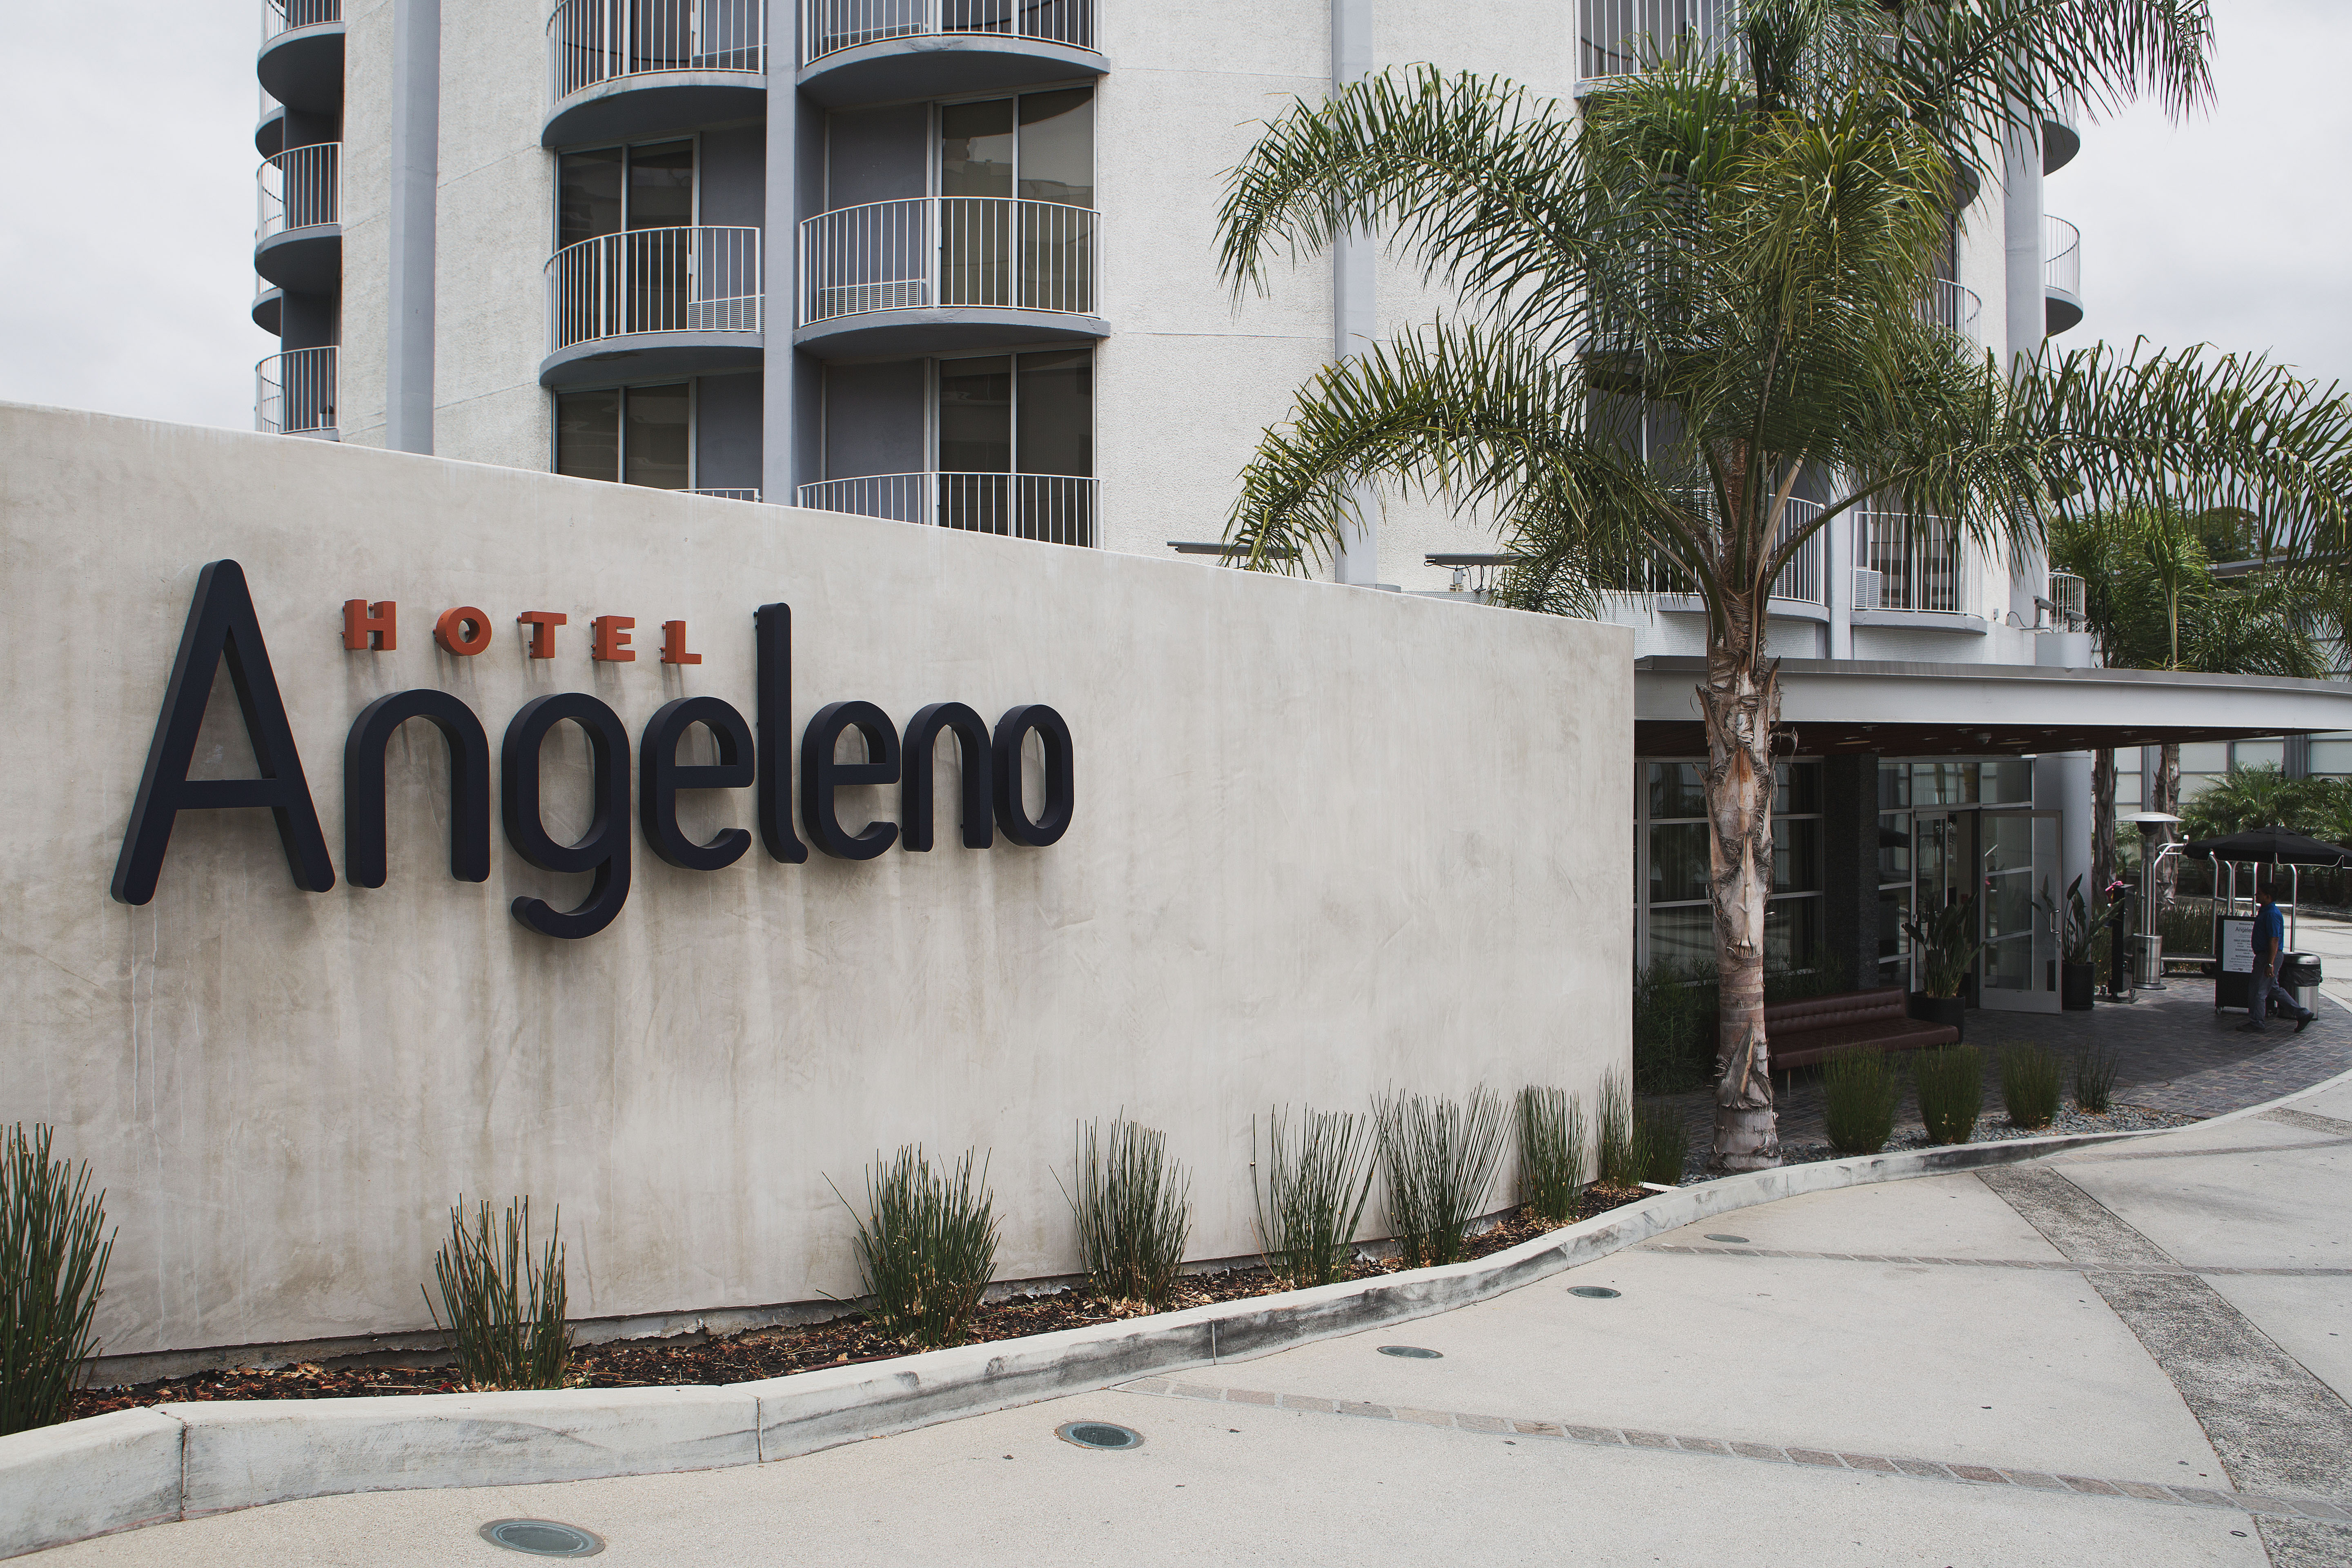 Hotel-Angelano_-5 Hotels in LA: My Stay at Angeleno